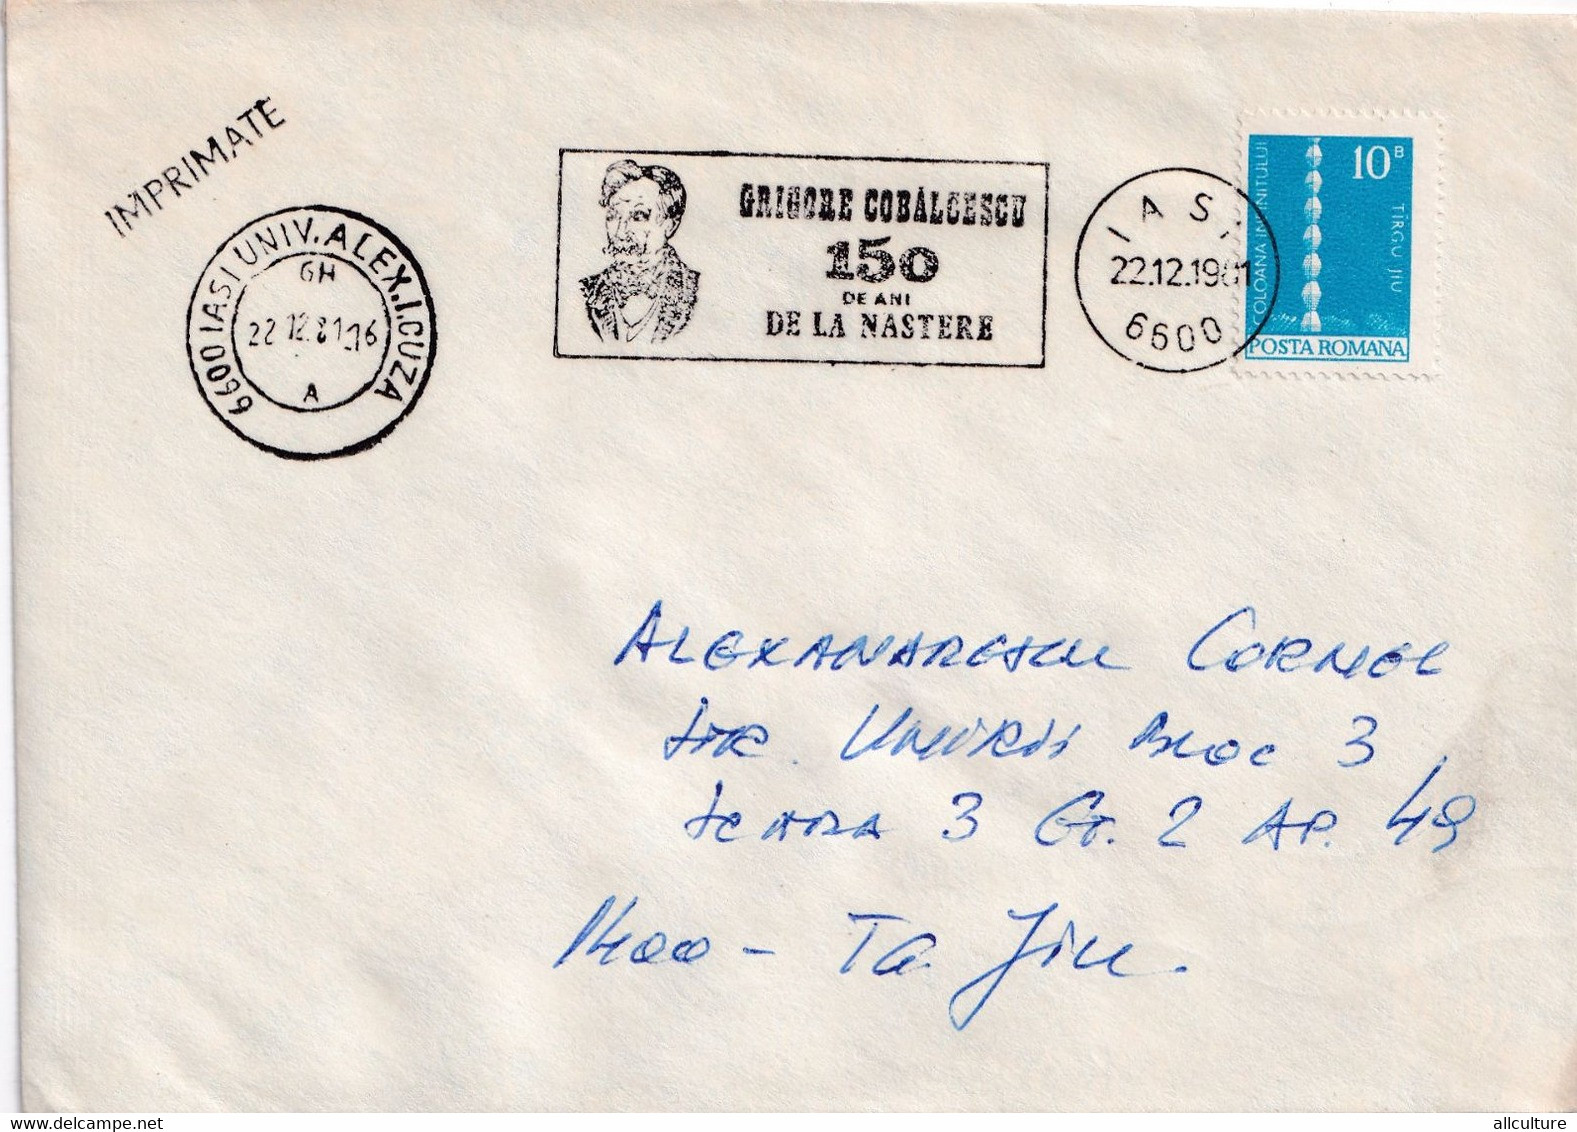 A2980 -  Grigore Cobalescu, Geolog Roman, Universitatea Alexandru Ioan Cuza Iasi 1981 Romania Posta Romana - Briefe U. Dokumente